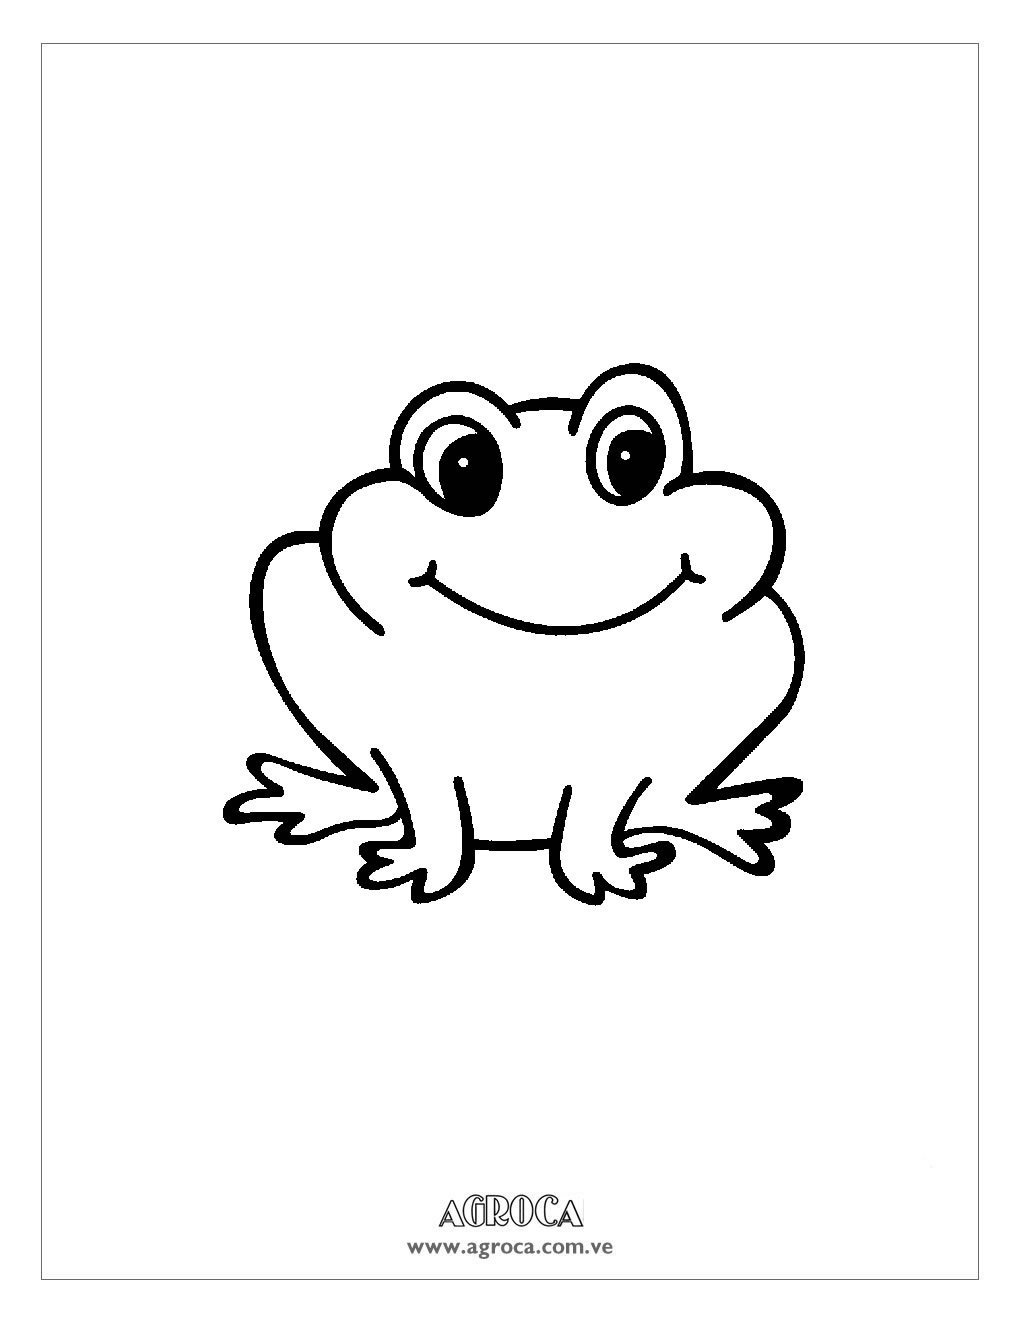 Как нарисовать мордочку лягушки легко